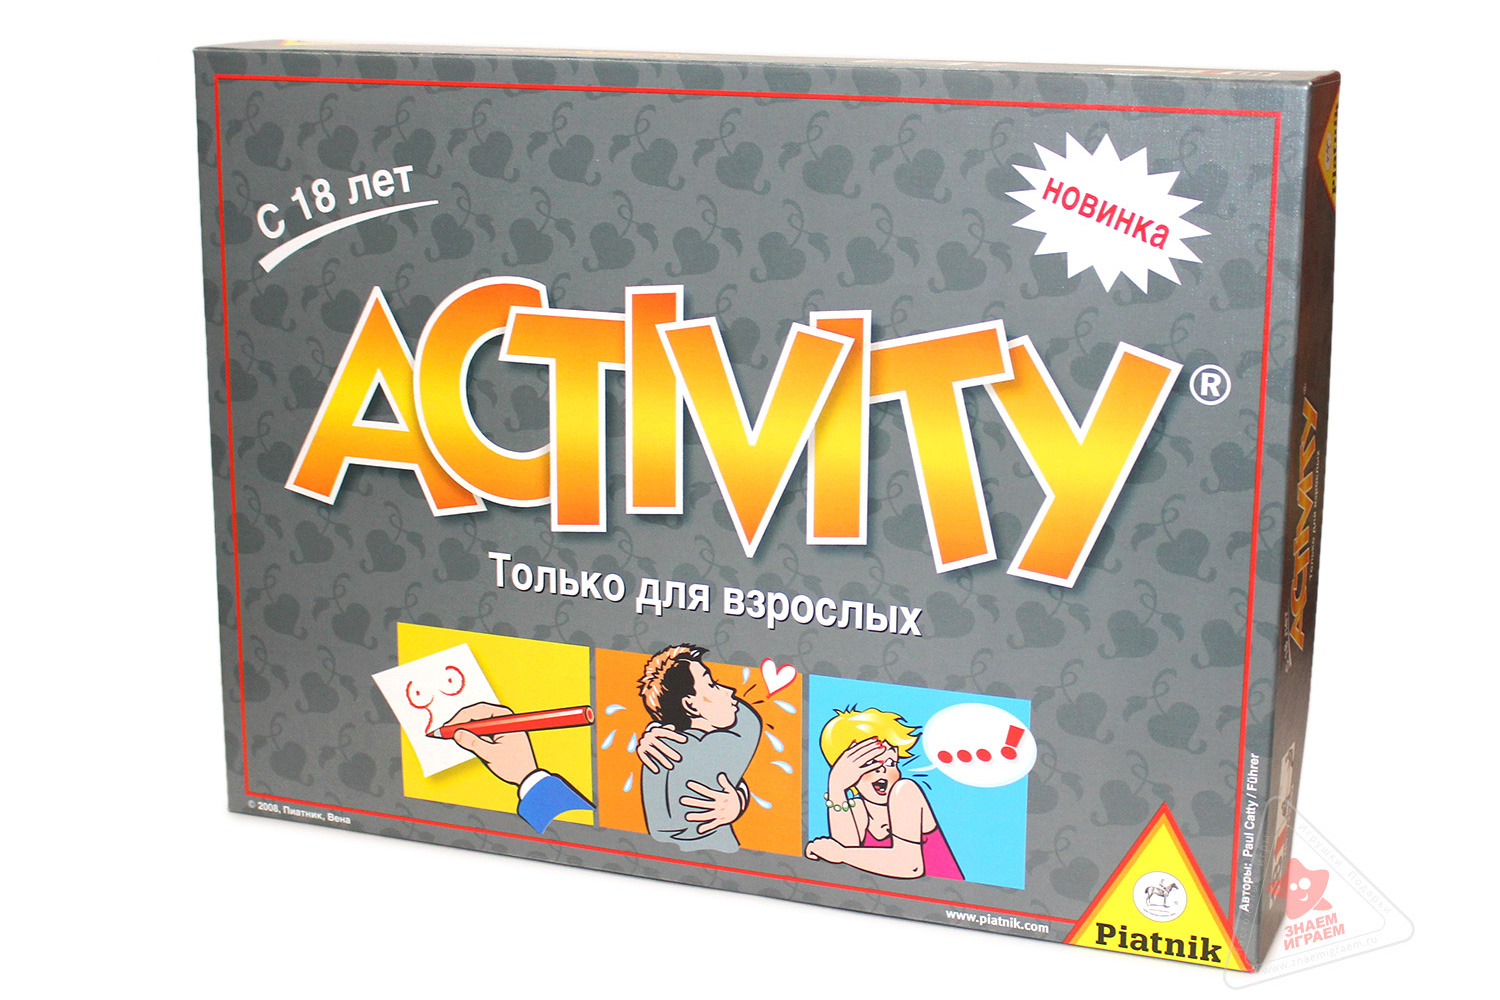 Смс активити. Активити игра для взрослых. Активити карточки. Игра Активити описание. Активити 18 +.